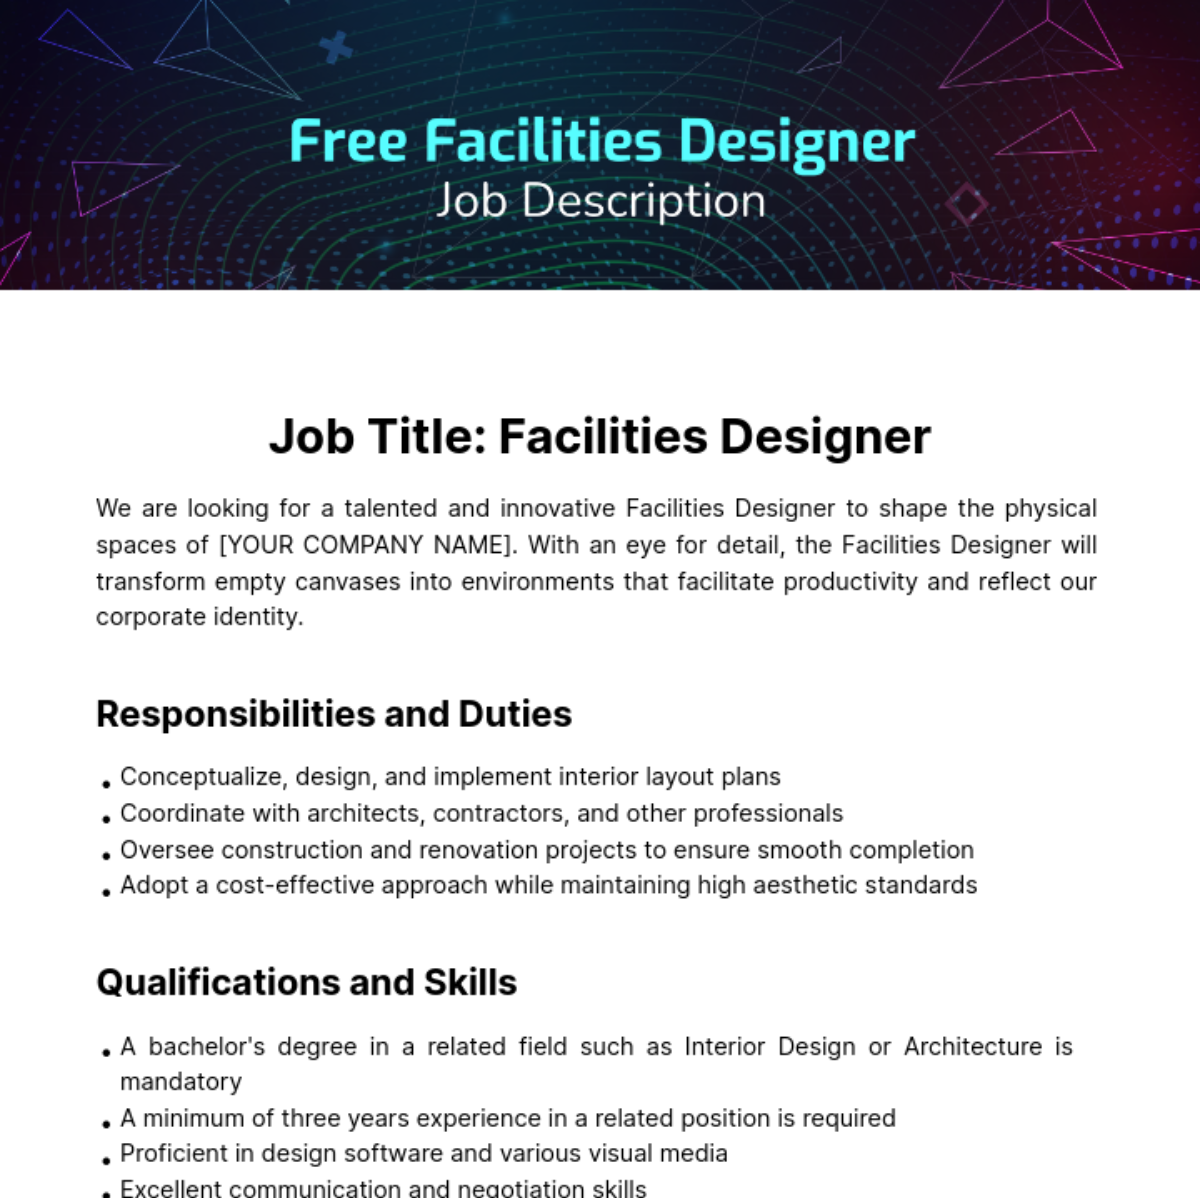 Free Facilities Designer Job Description Template